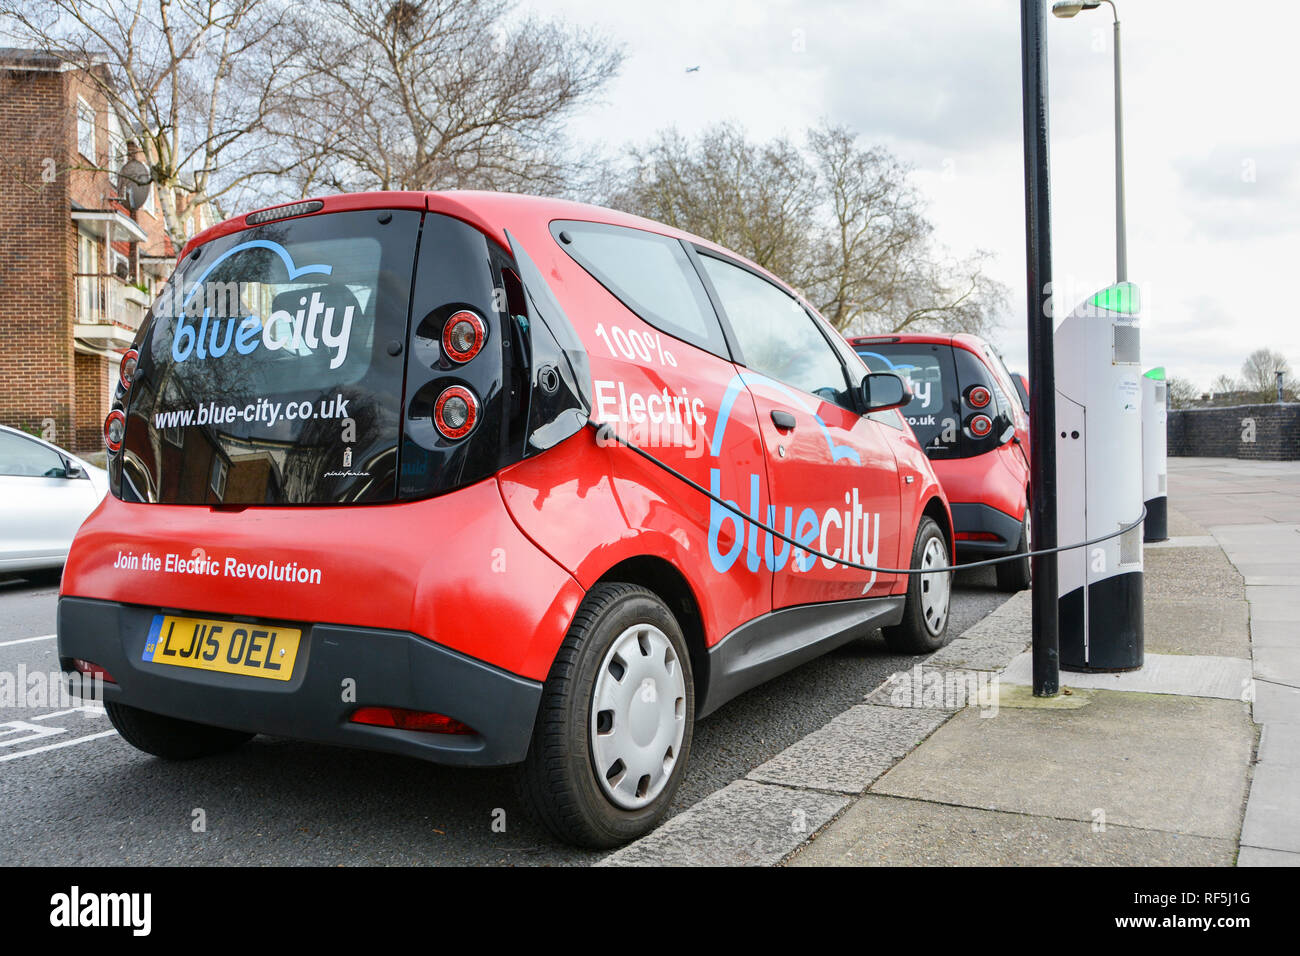 Blue City electric car-sharing scheme in LOndon, UK Stock Photo - Alamy